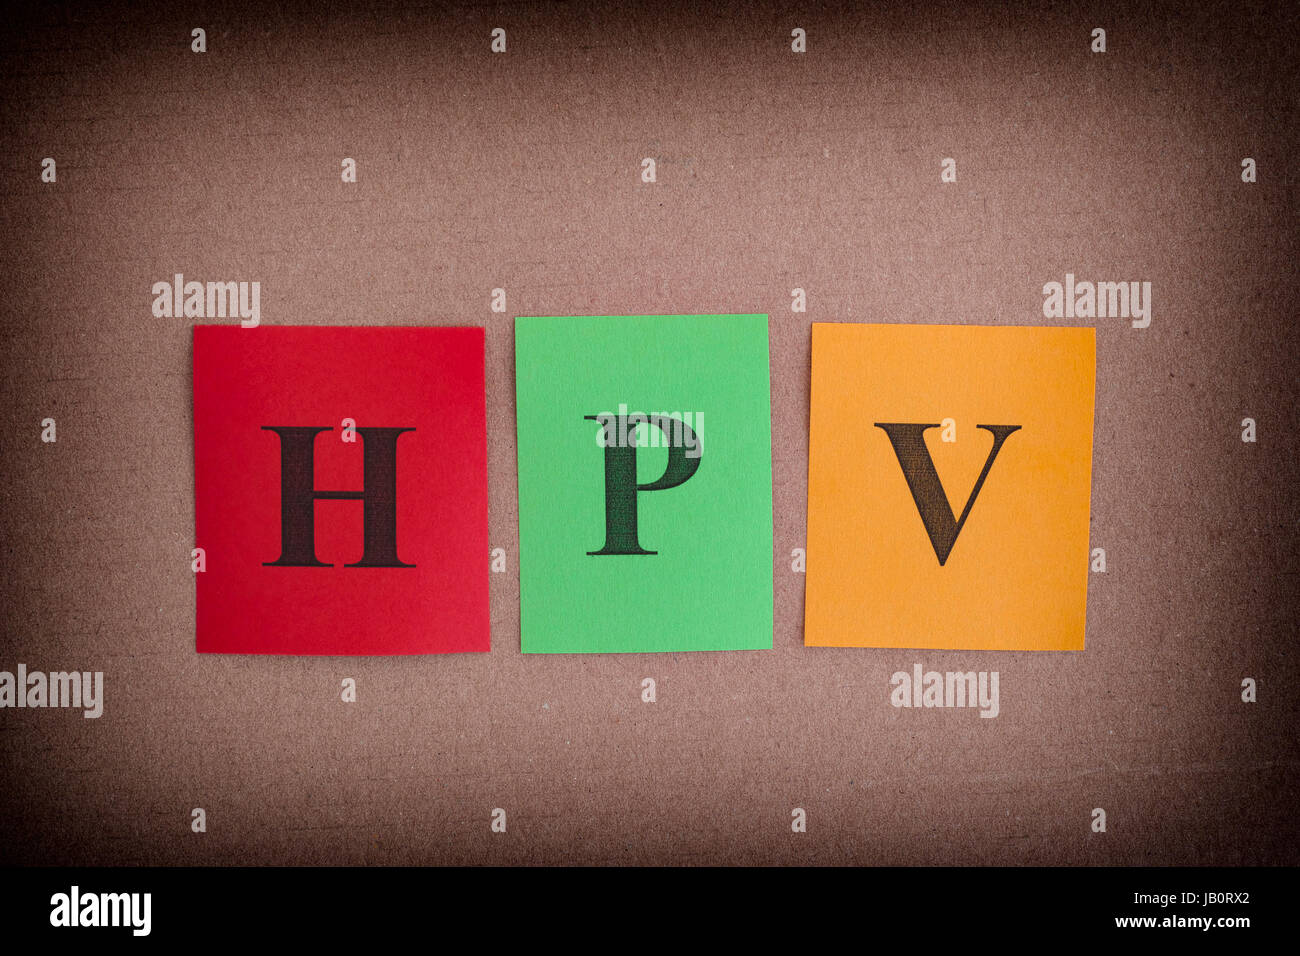 HPV (Human Papillomavirus). Colorful paper notes with abbreviation HPV. Stock Photo